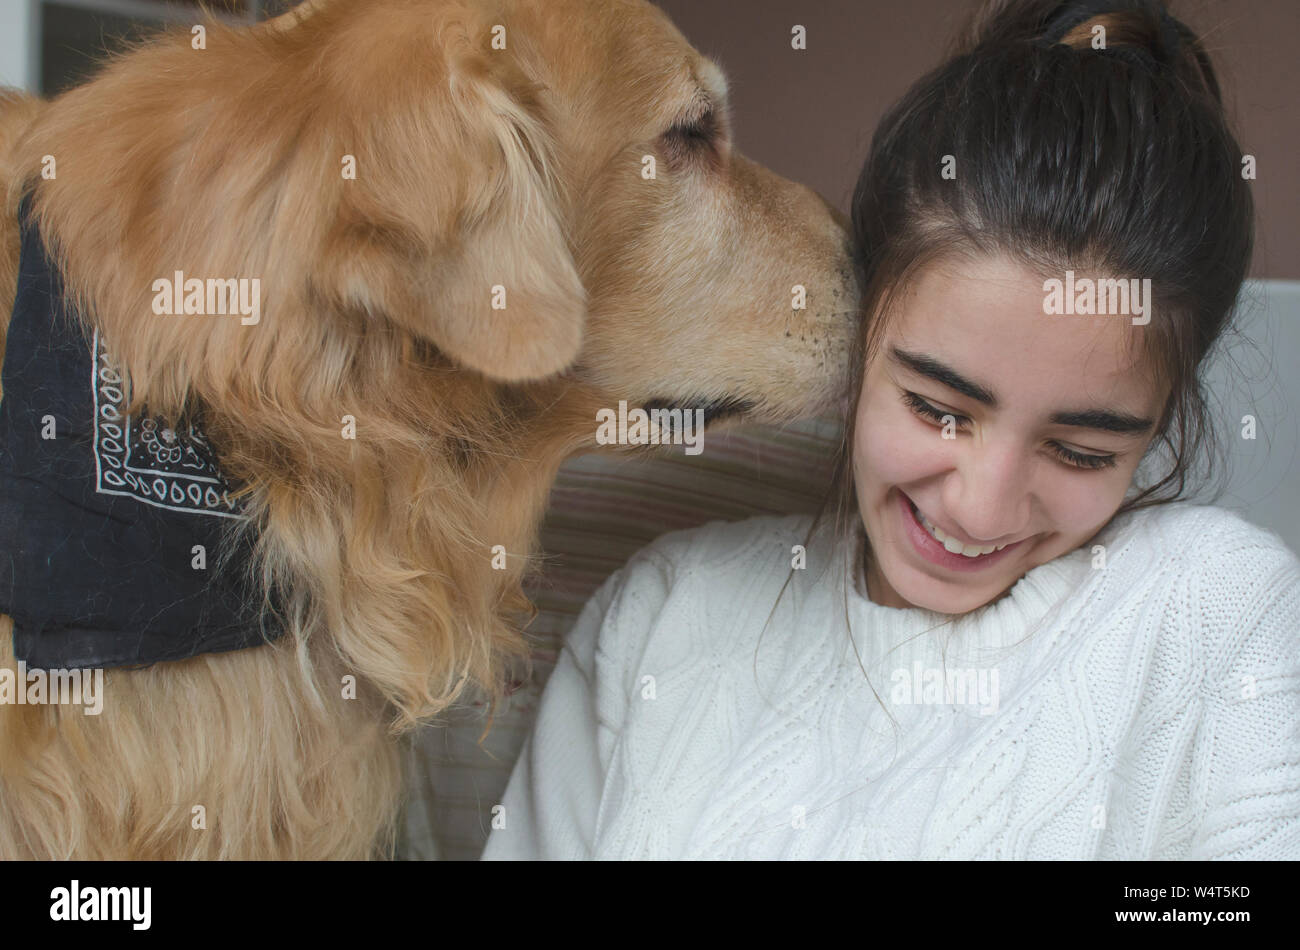 Golden retriever dog nuzzling a teenage girl's ear Stock Photo